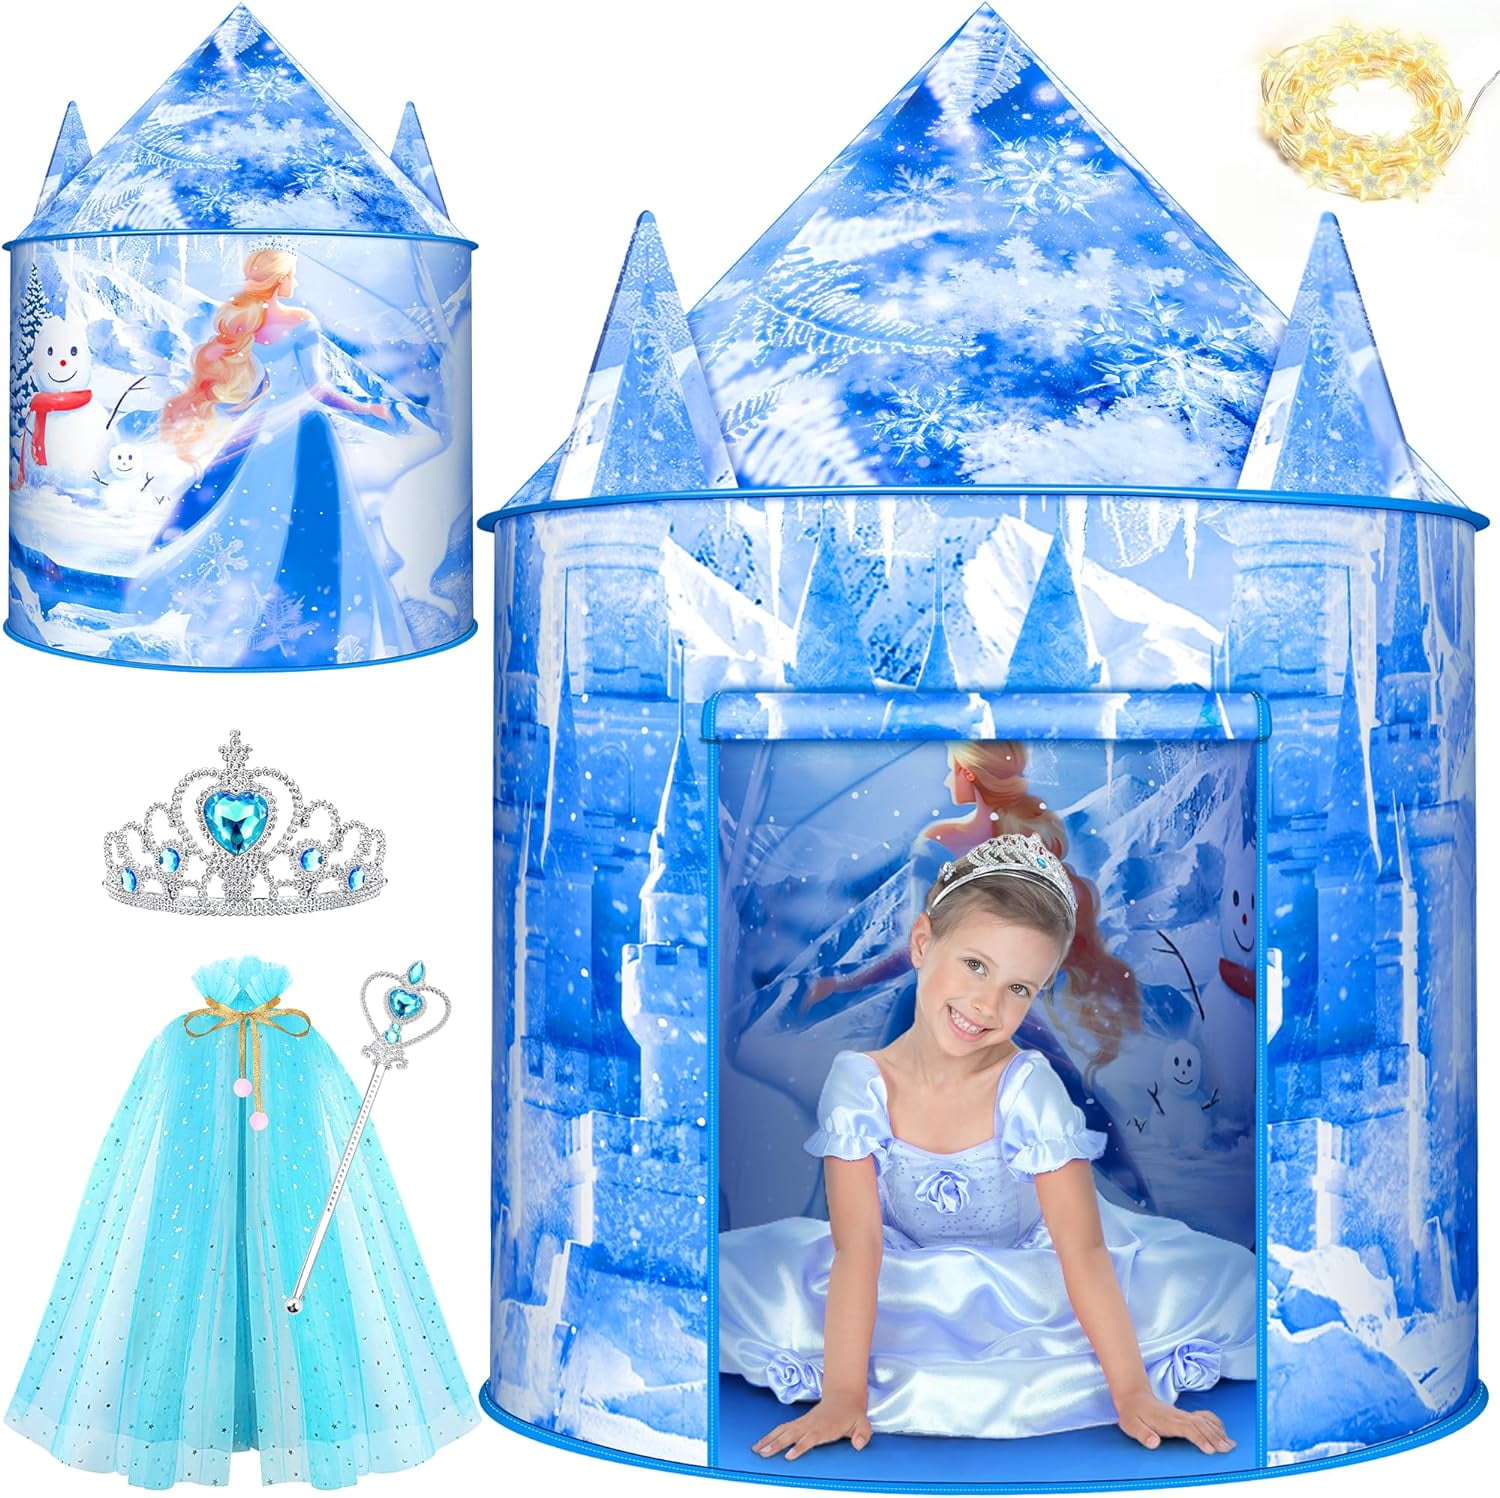 Trombetta Compleanno Princess Summer Palace Disney